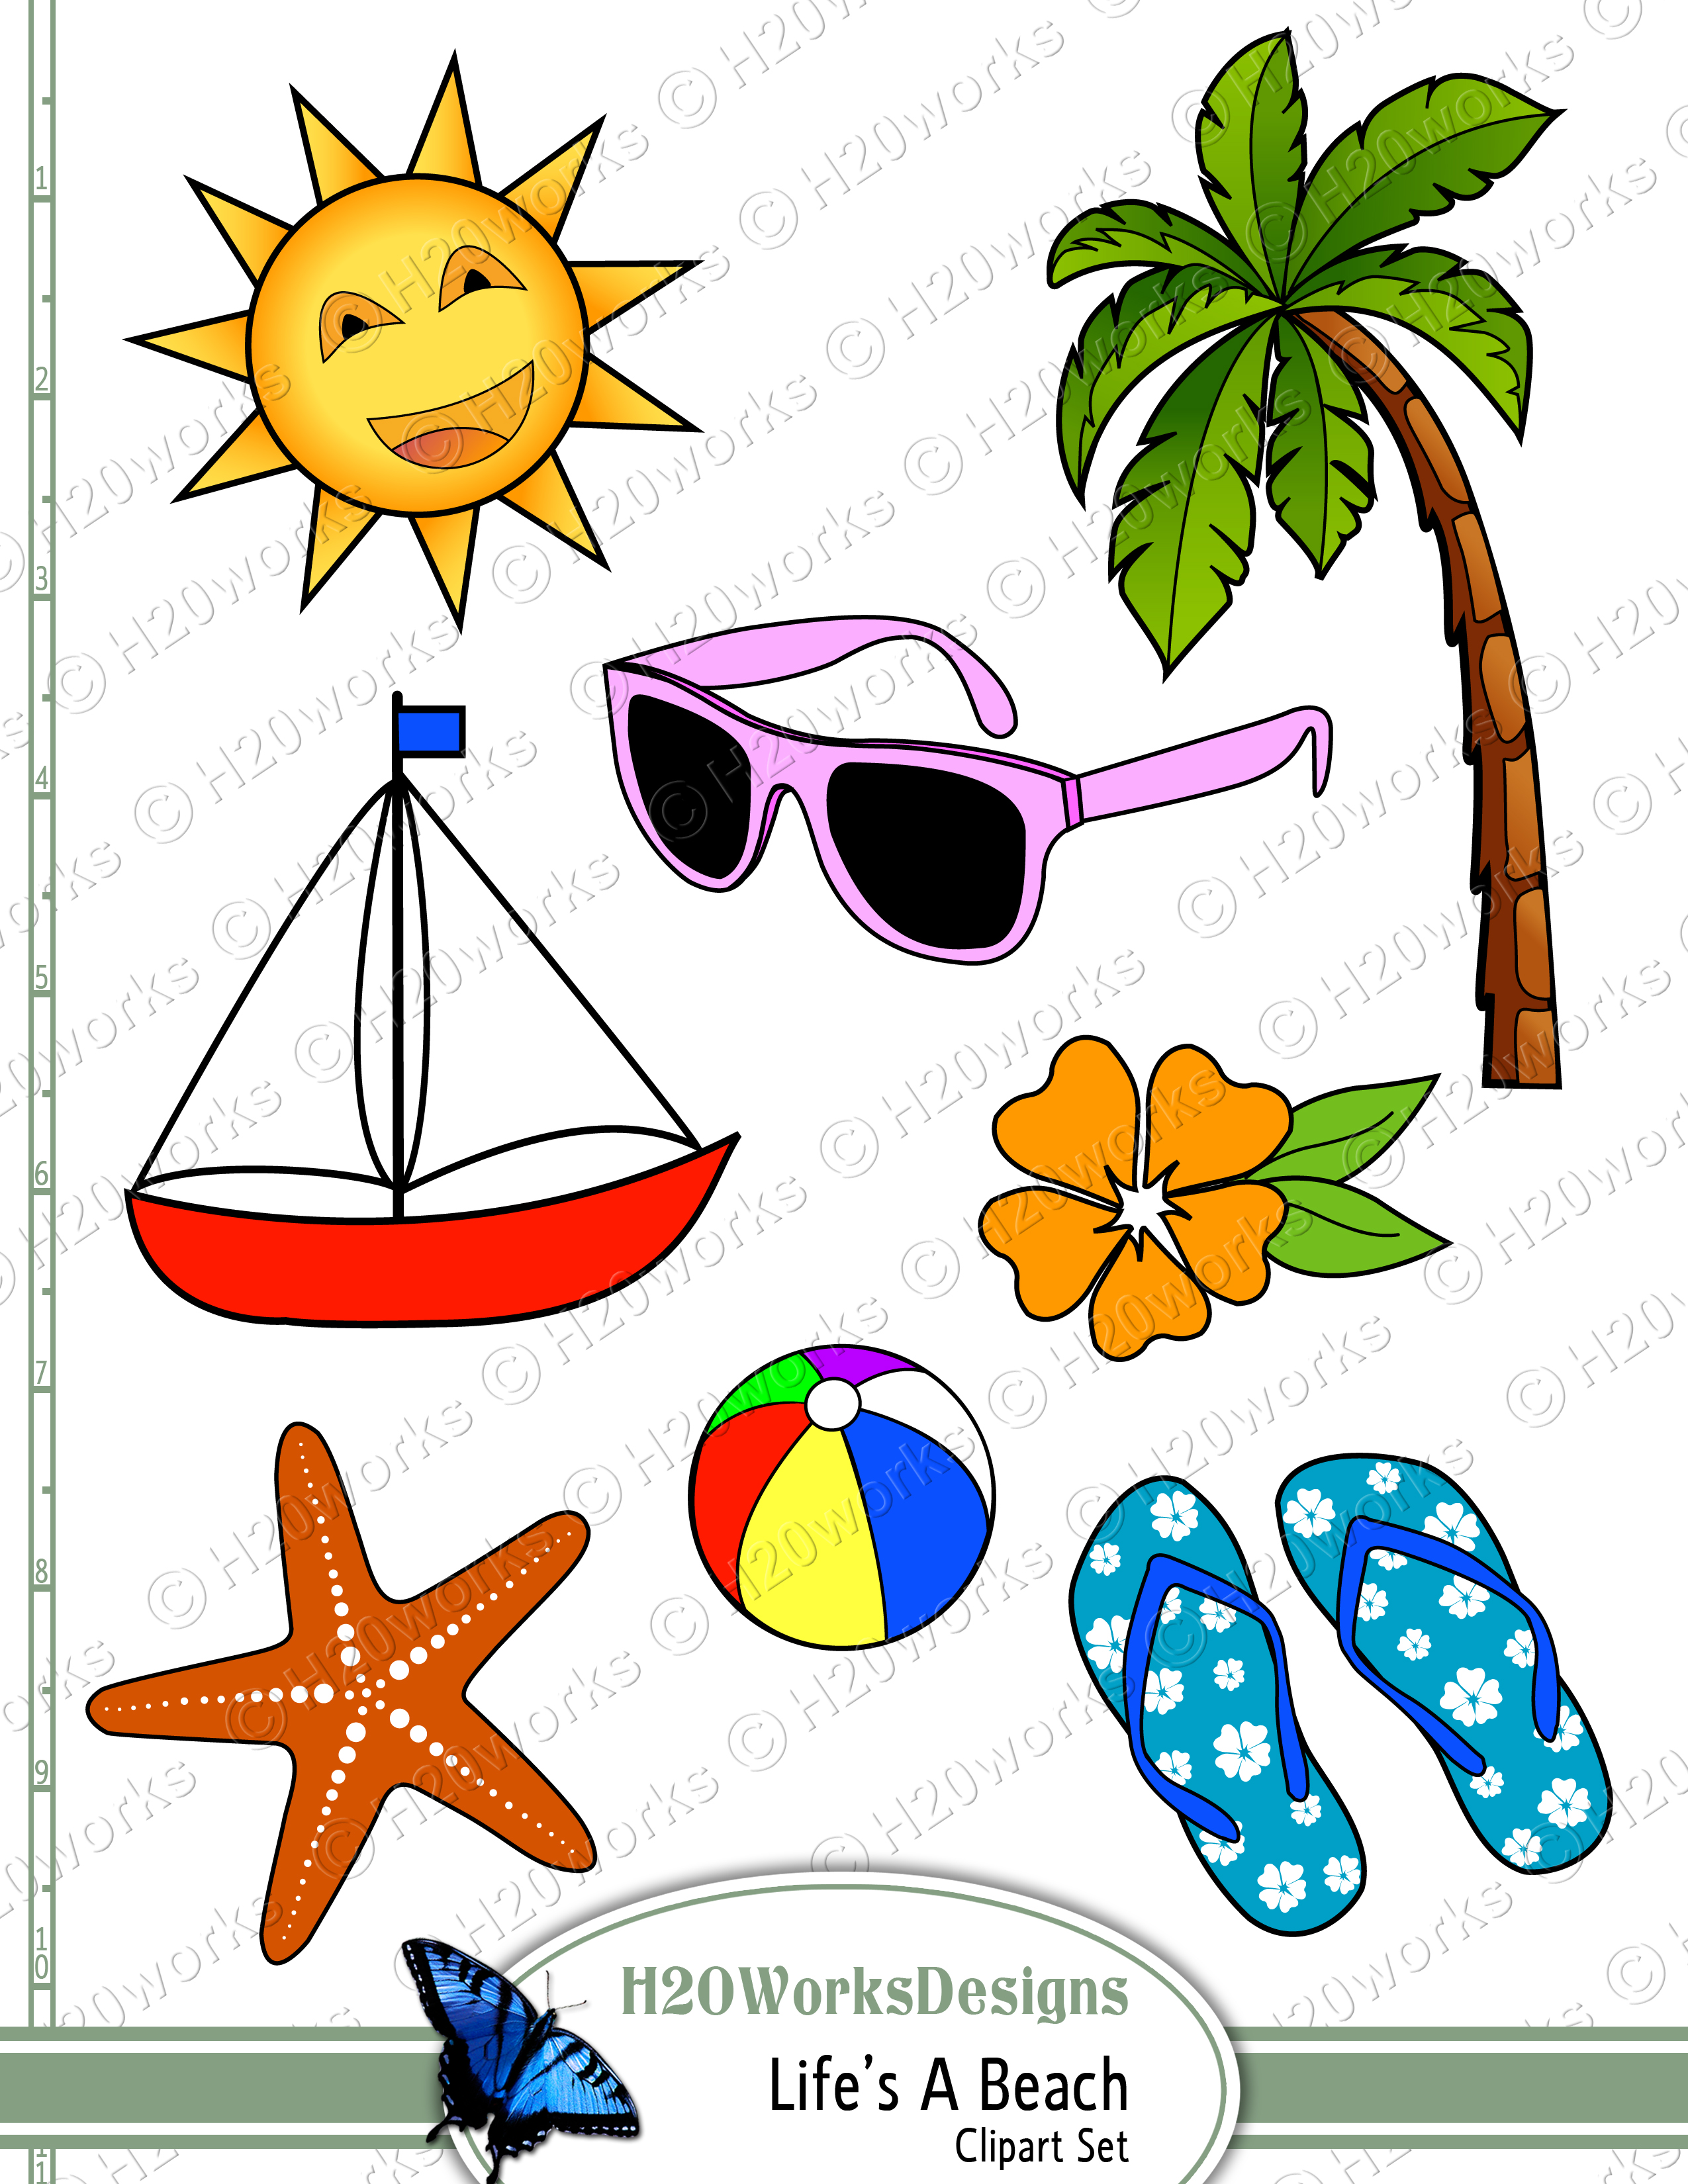 Life S A Beach Clipart Set On 8 5x11 Sheet   Starfish Sun Palm Tree    